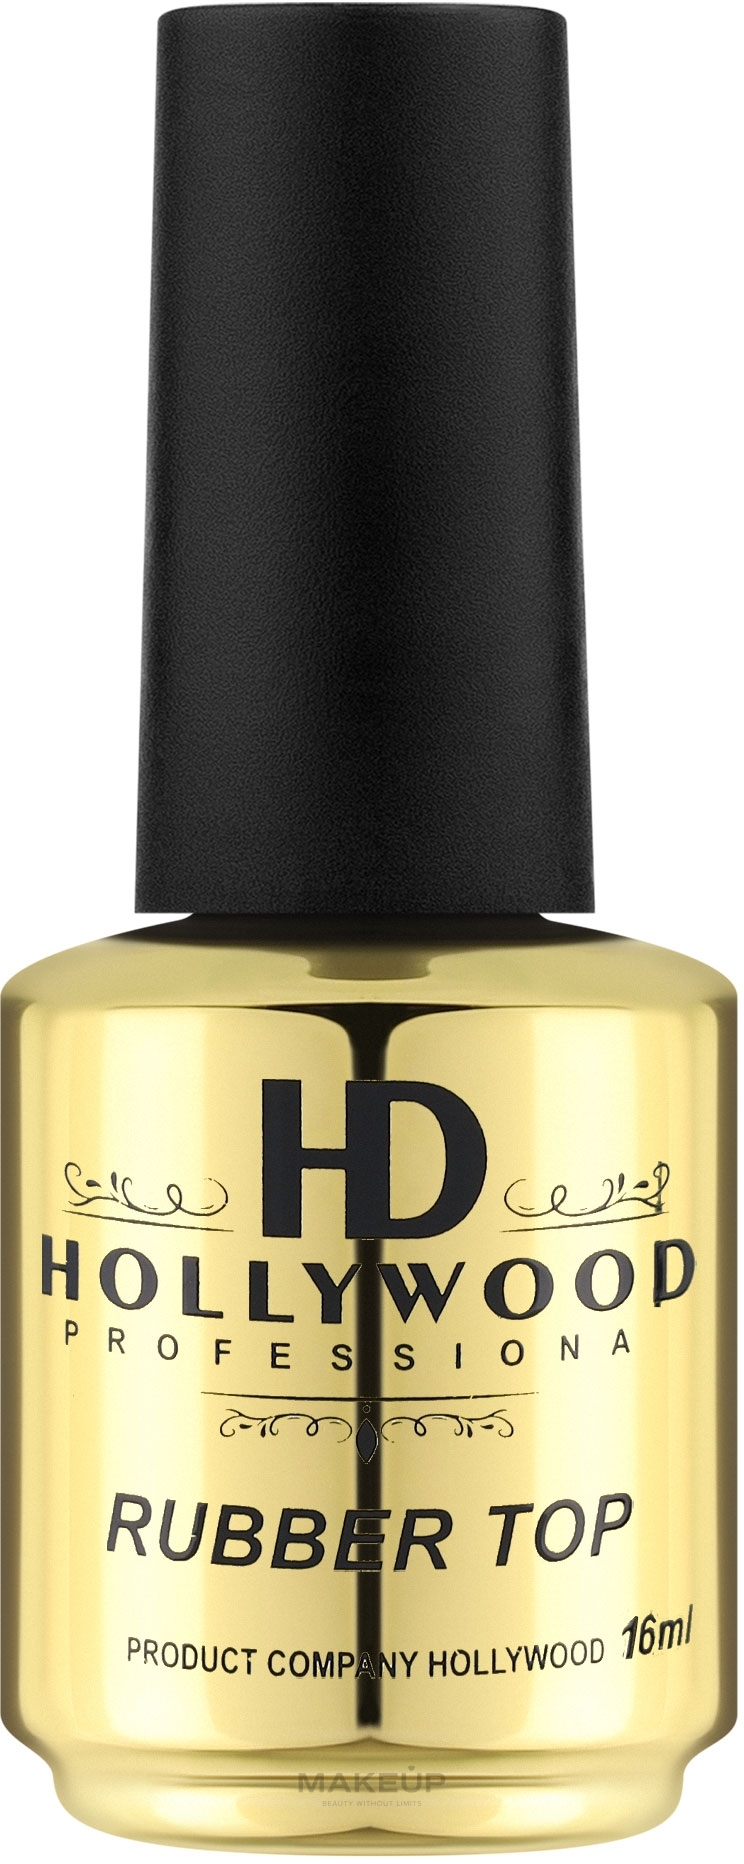 Топ для гель-лака, каучуковый - HD Hollywood Rubber Top — фото 16ml